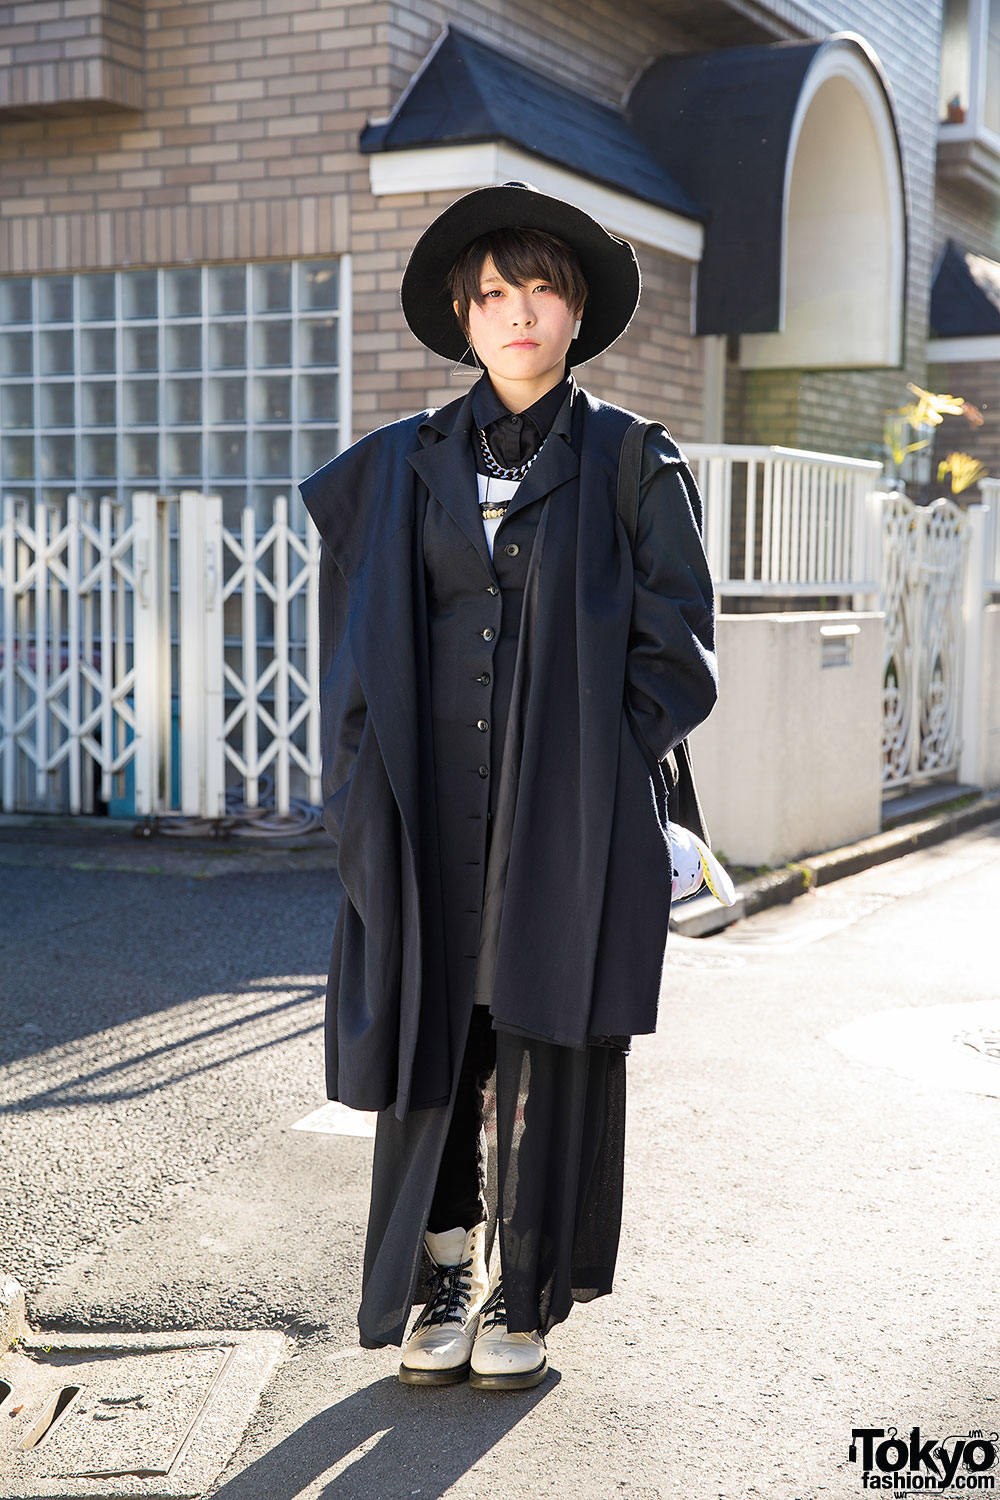 Harajuku Girl in Layered Black & White Resale Style w/ Hat & Teeth ...